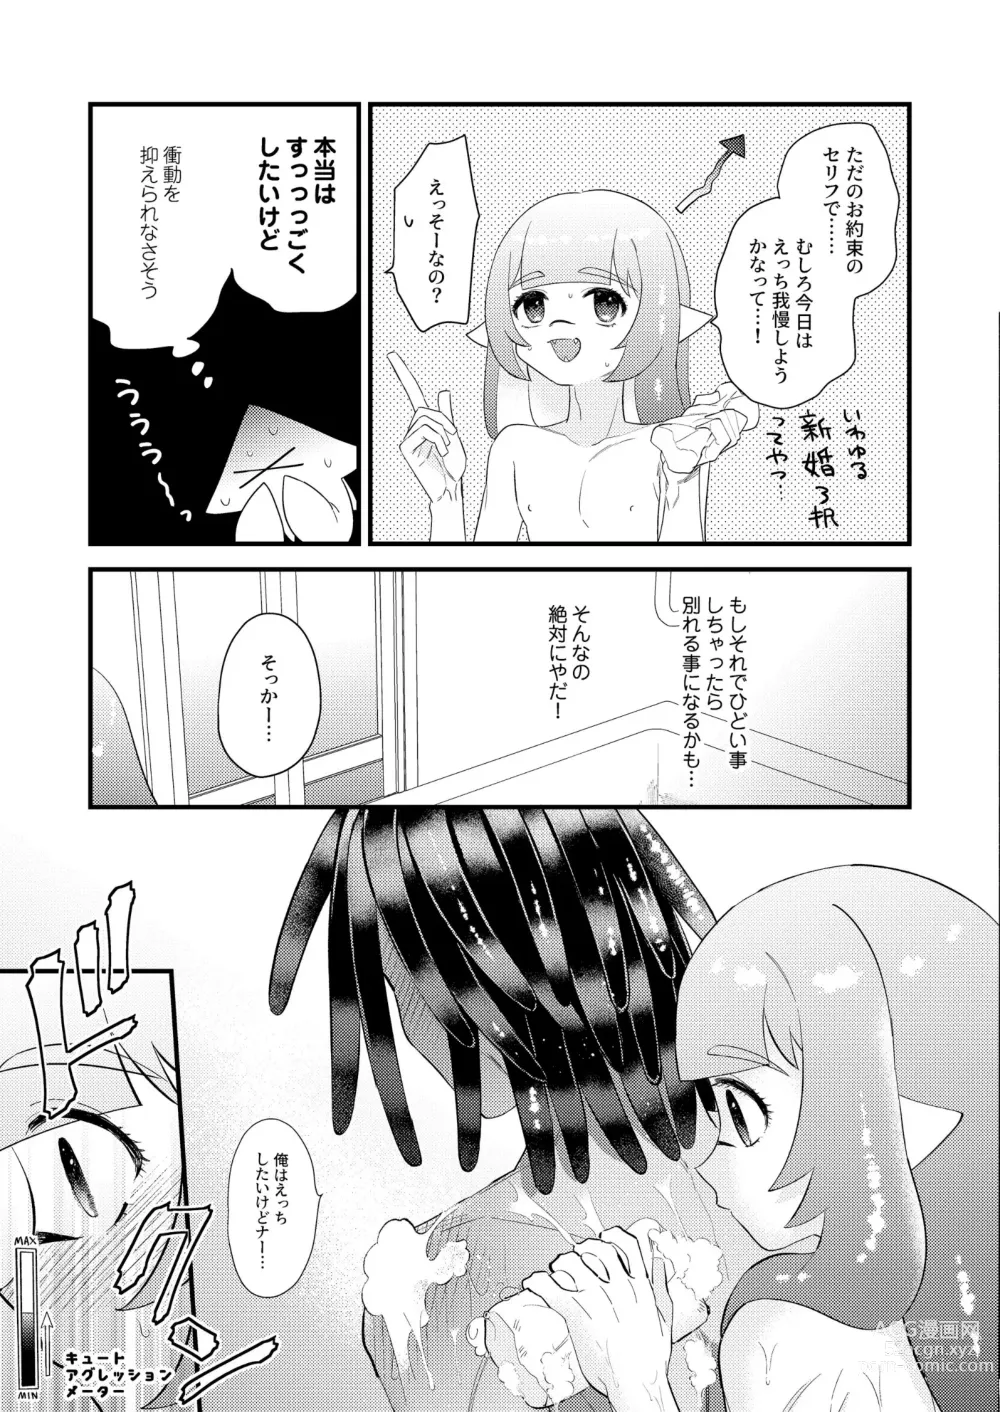 Page 10 of doujinshi Uketomete Hoshii no My Darling! - I want you to accept me my darling!